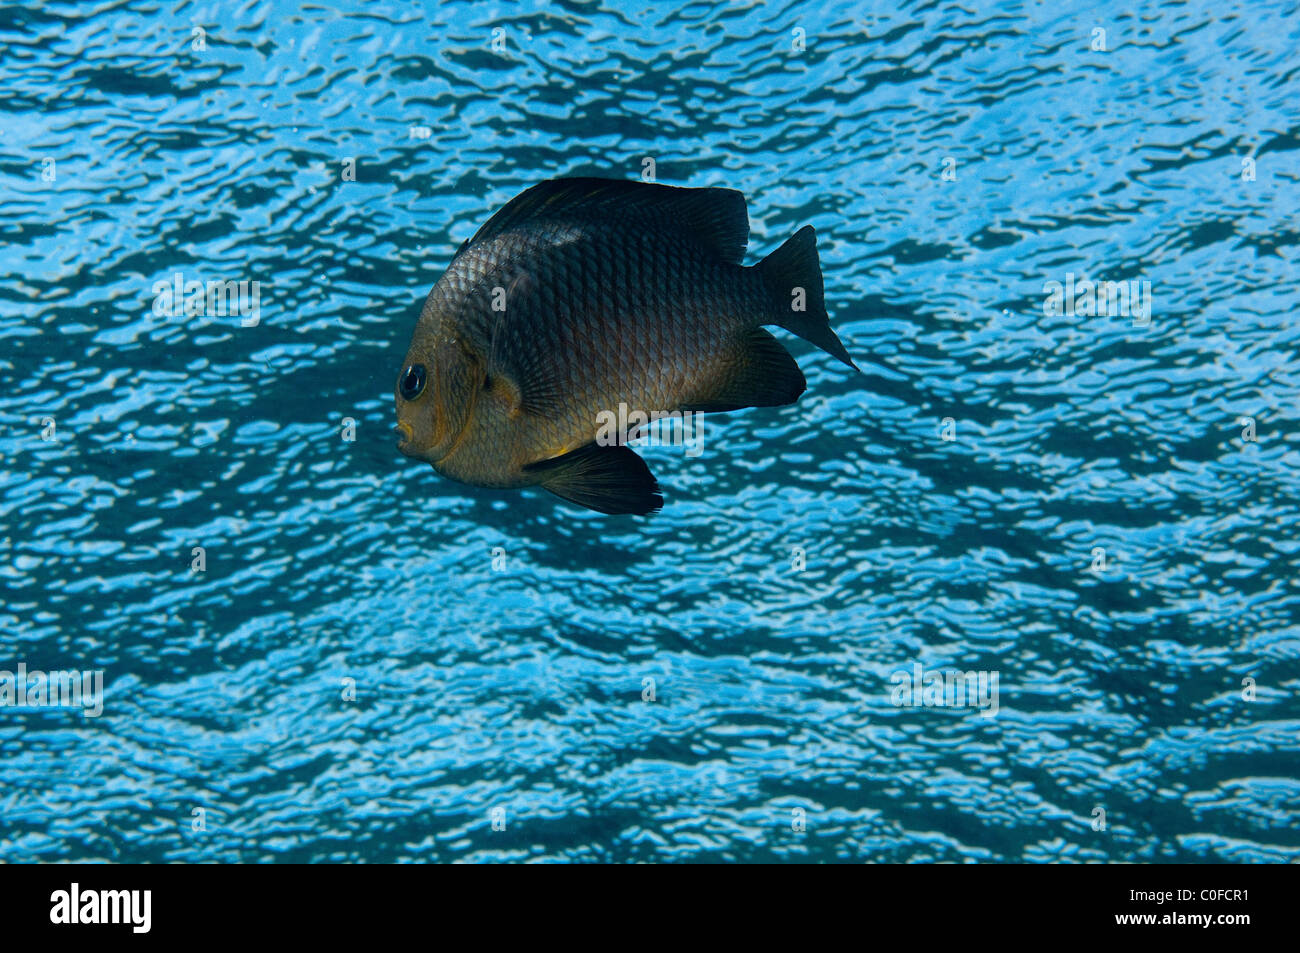 Three spot dascyllus fish (Dascyllus trimaculatus) on a coral reef. Stock Photo